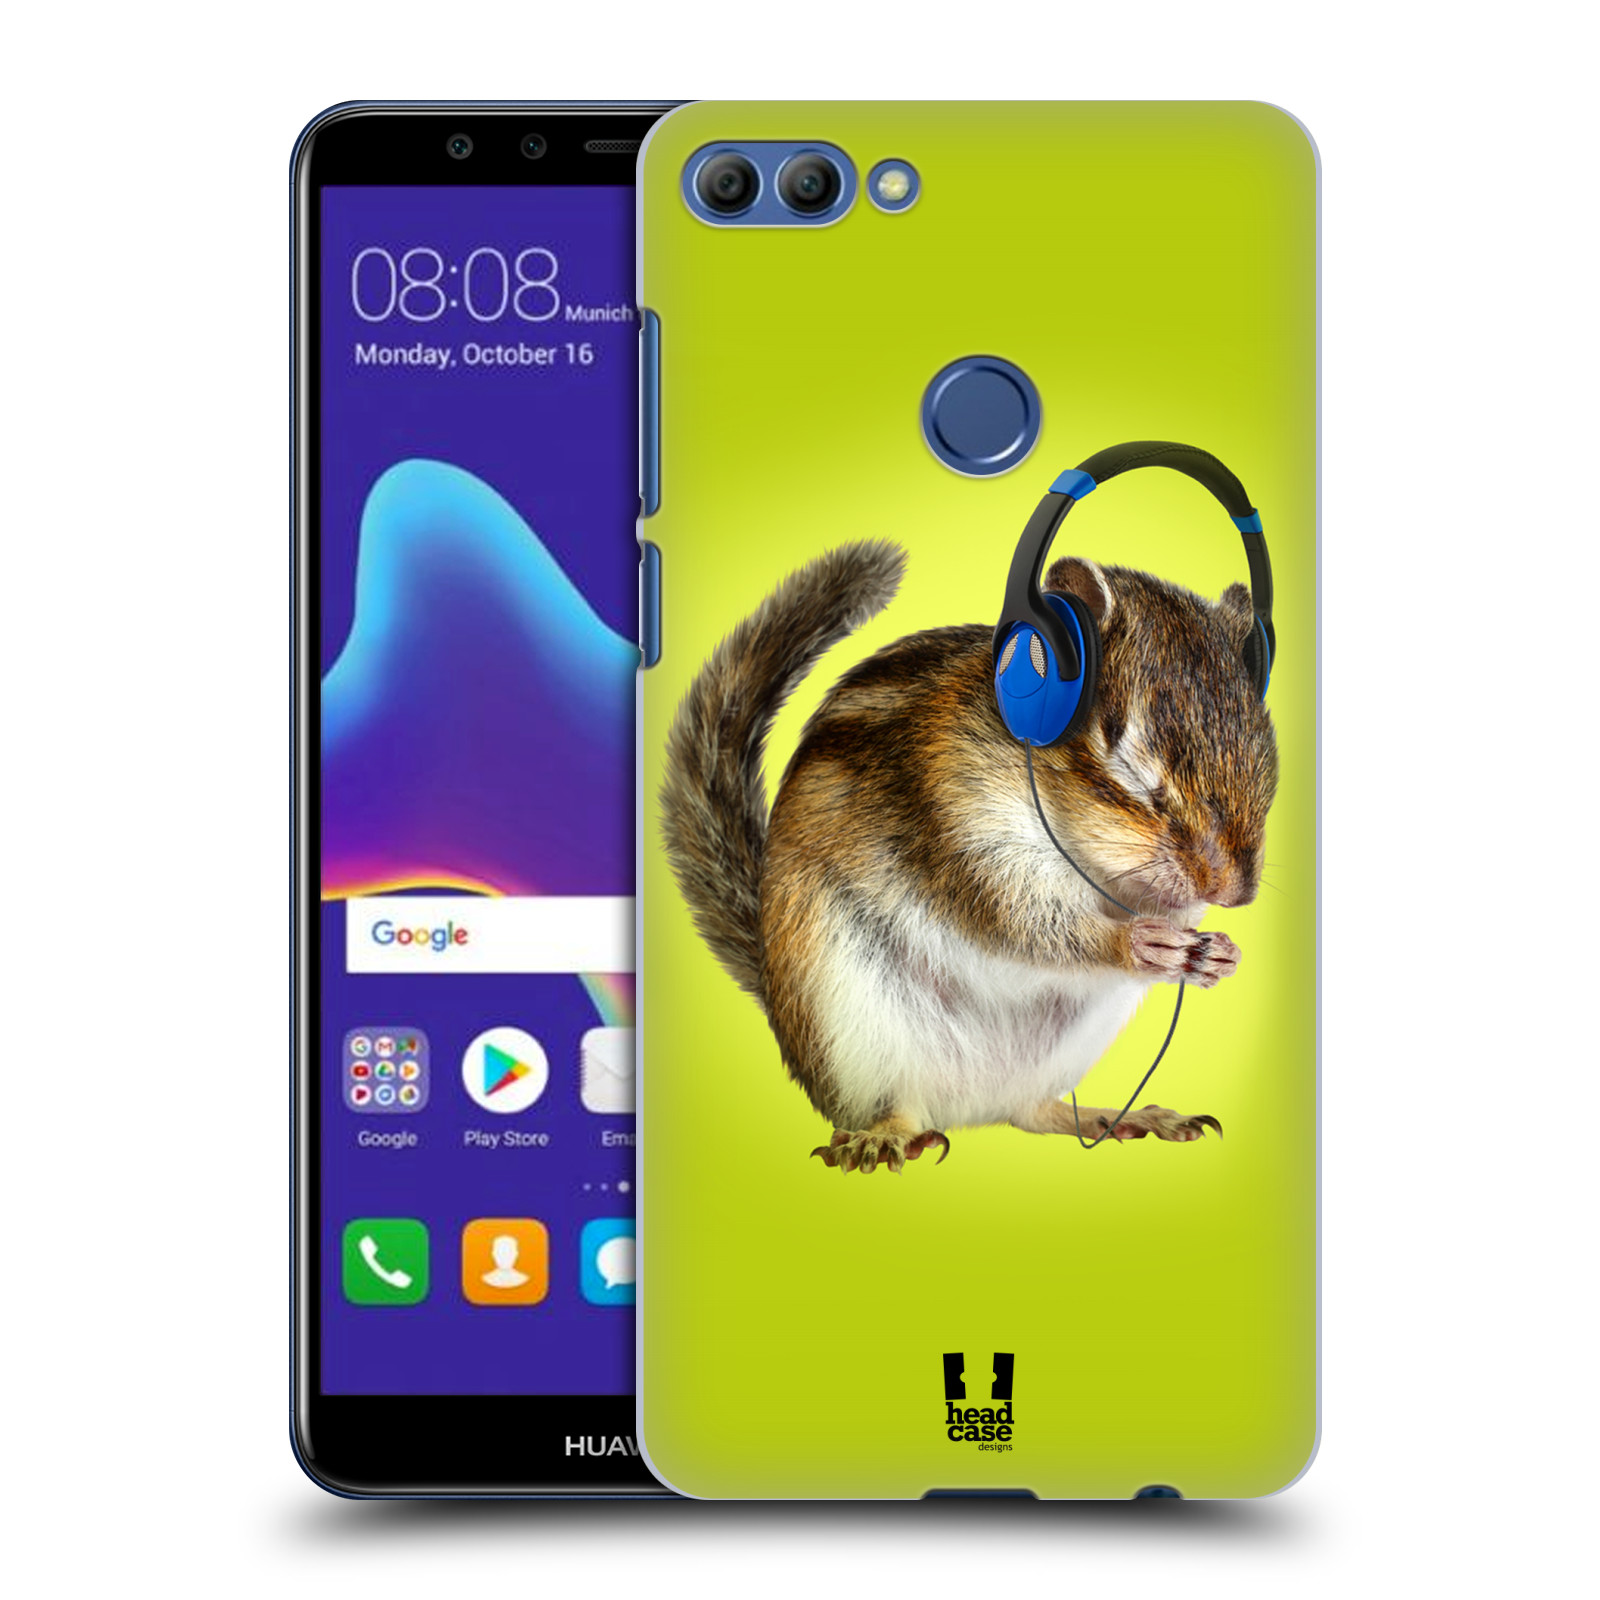 HEAD CASE plastový obal na mobil Huawei Y9 2018 vzor Legrační zvířátka veverka se sluchátky